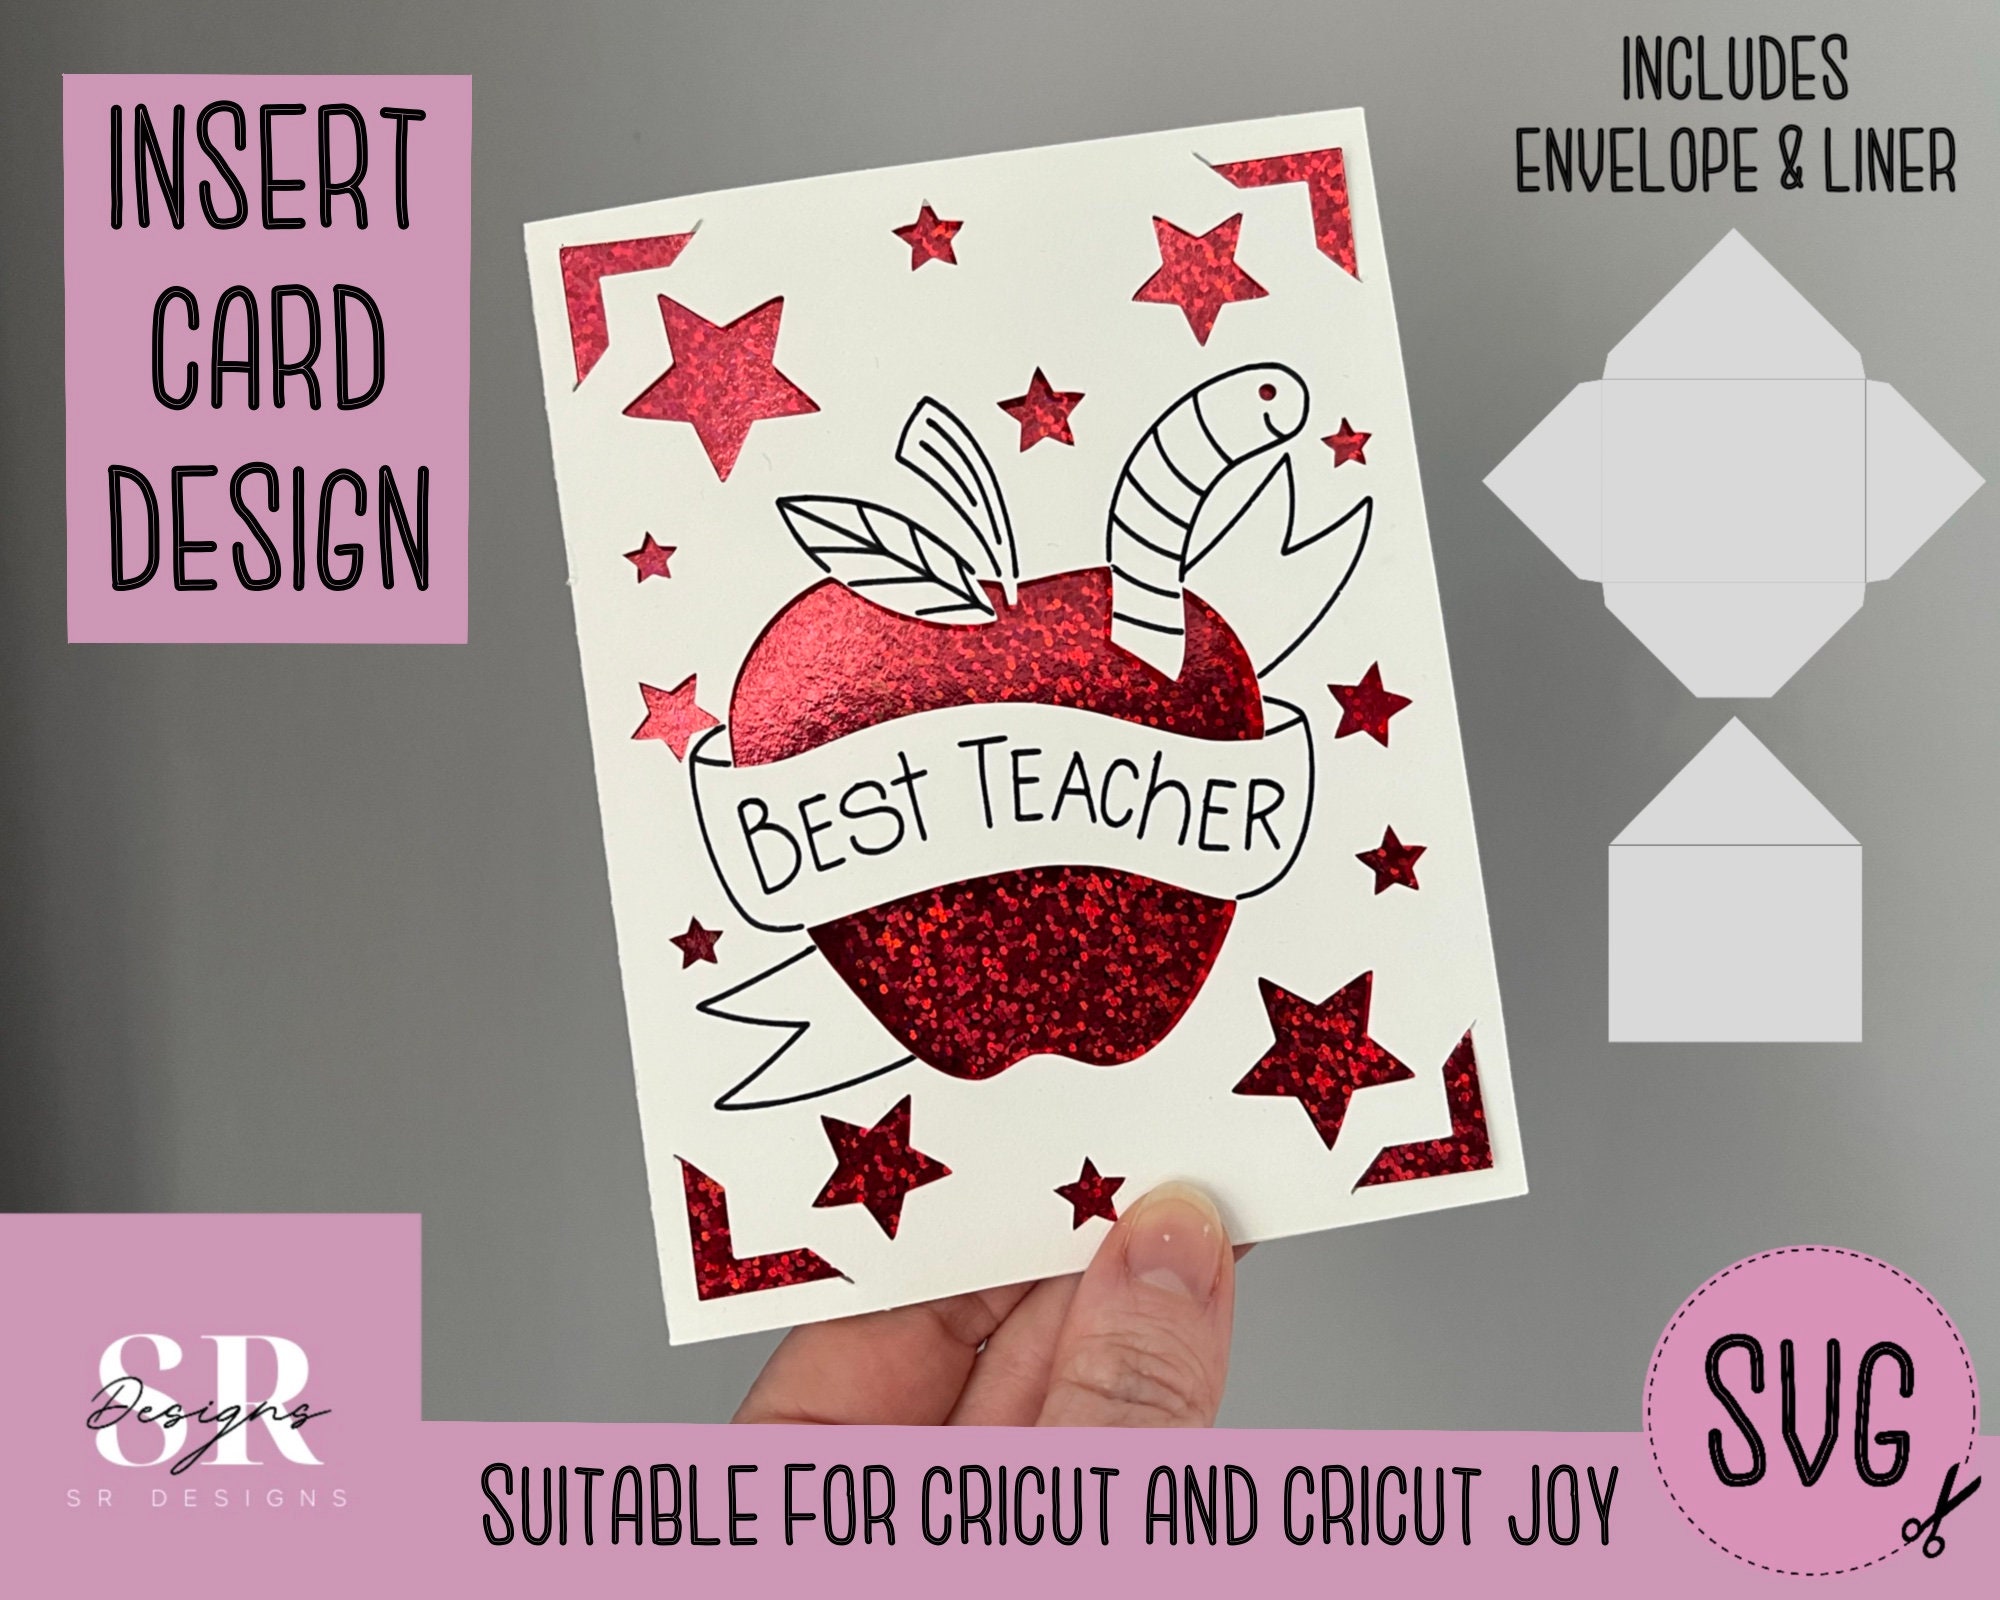 SVG: Engagement insert card. Cricut Joy friendly. Draw and cut card design.  Envelope template included. Cricut Joy engagement card SVG